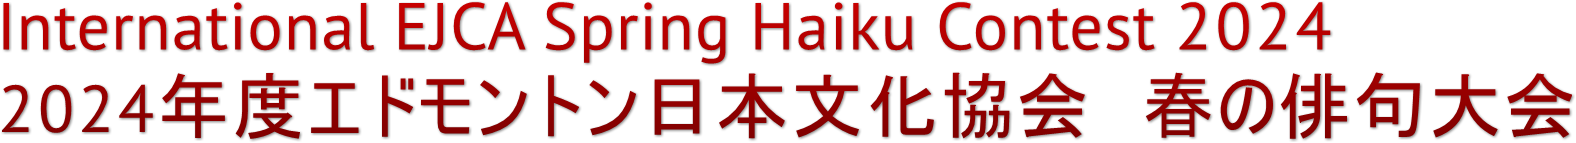 International EJCA Spring Haiku Contest 2024
2024年度エドモントン日本文化協会　春の俳句大会